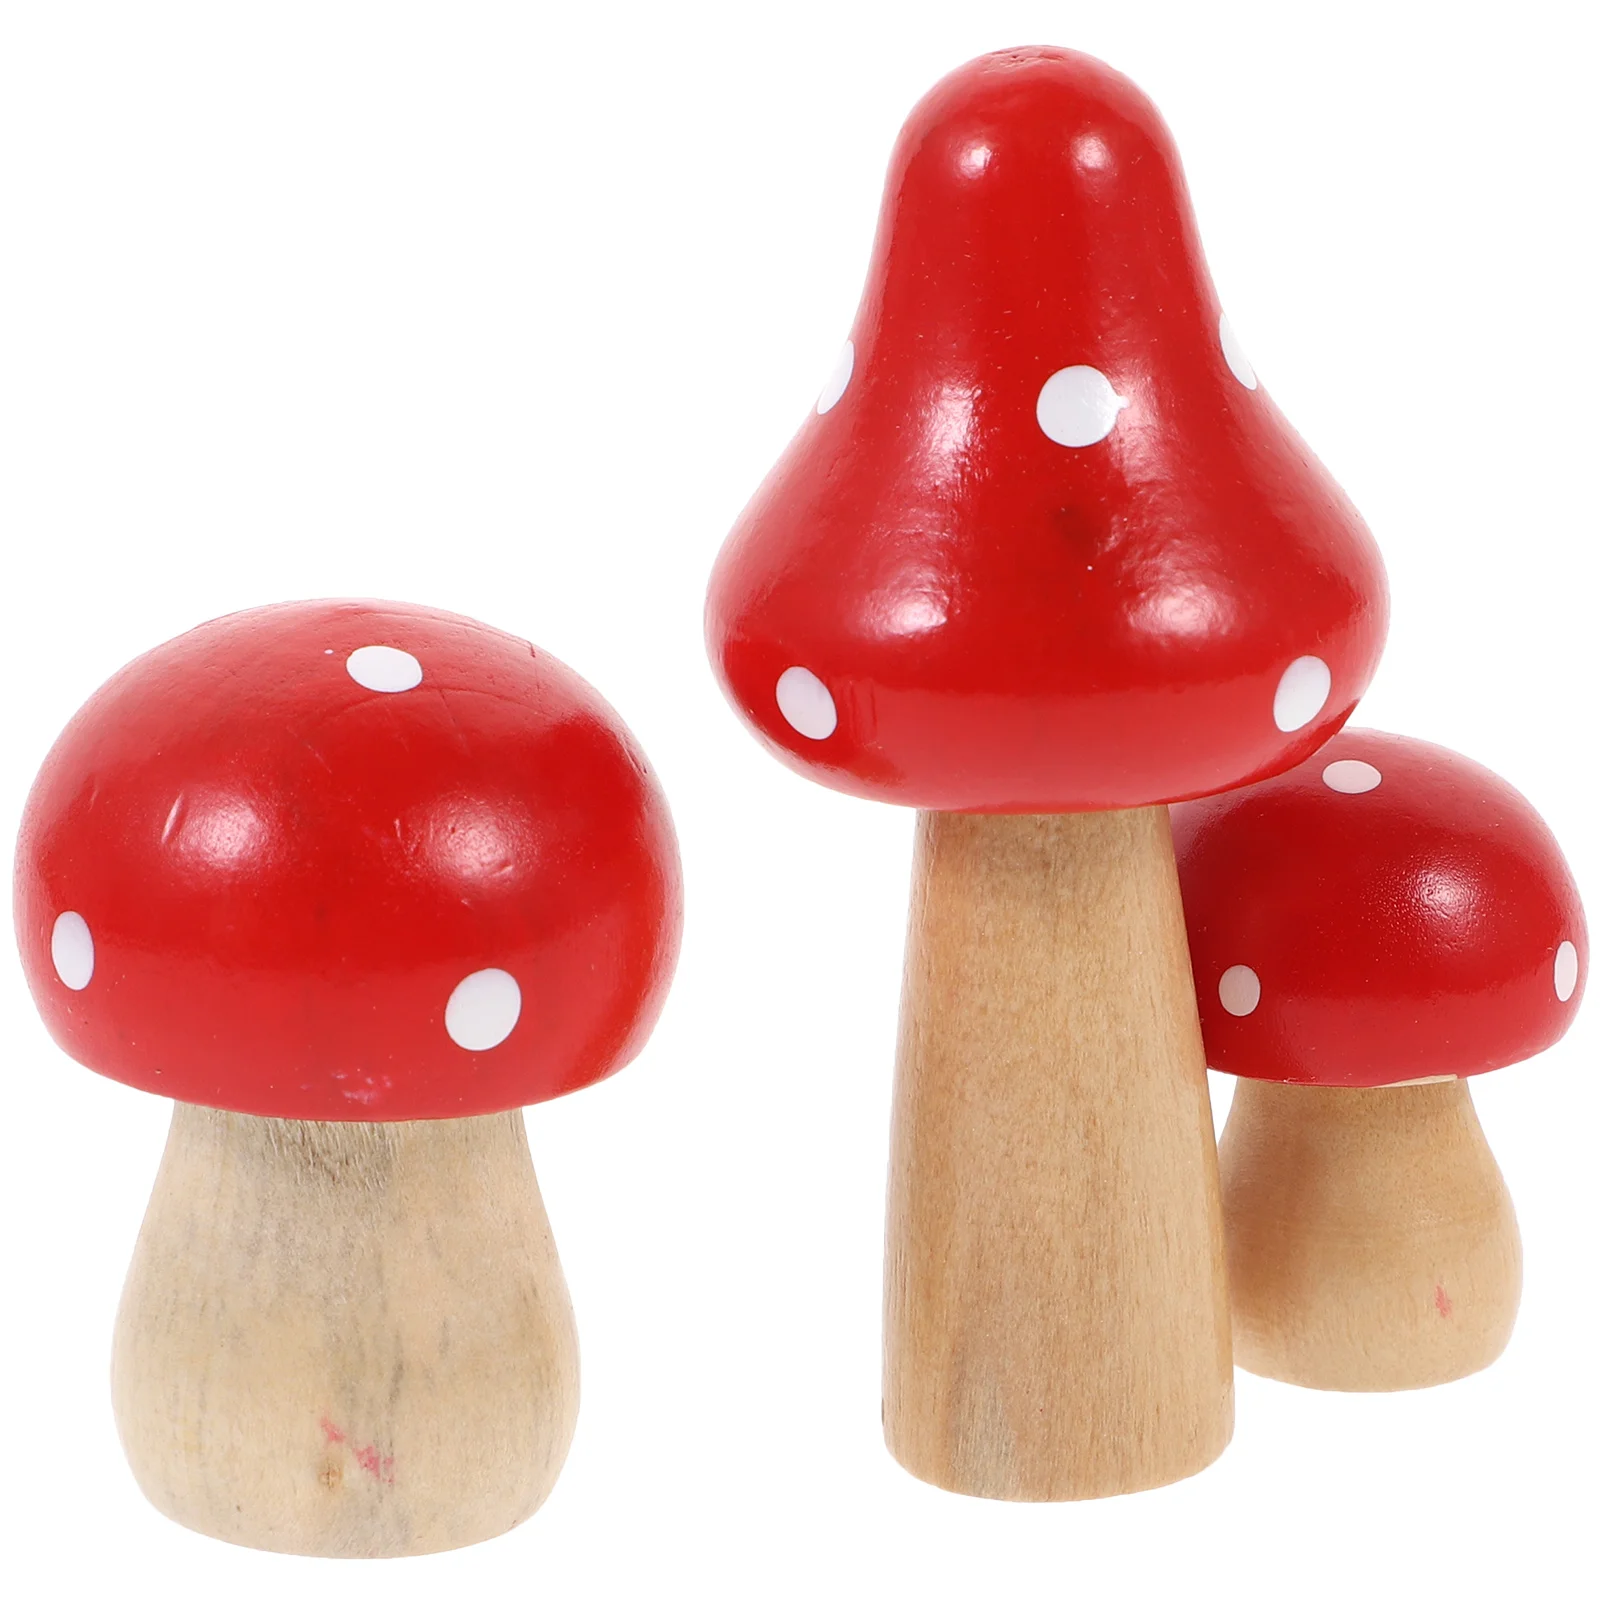 

Mushroom Miniature Garden Ornament Mini Wooden Accessories Landscape Figurines Mushrooms Micro Figurine Desk Sculpture Decor